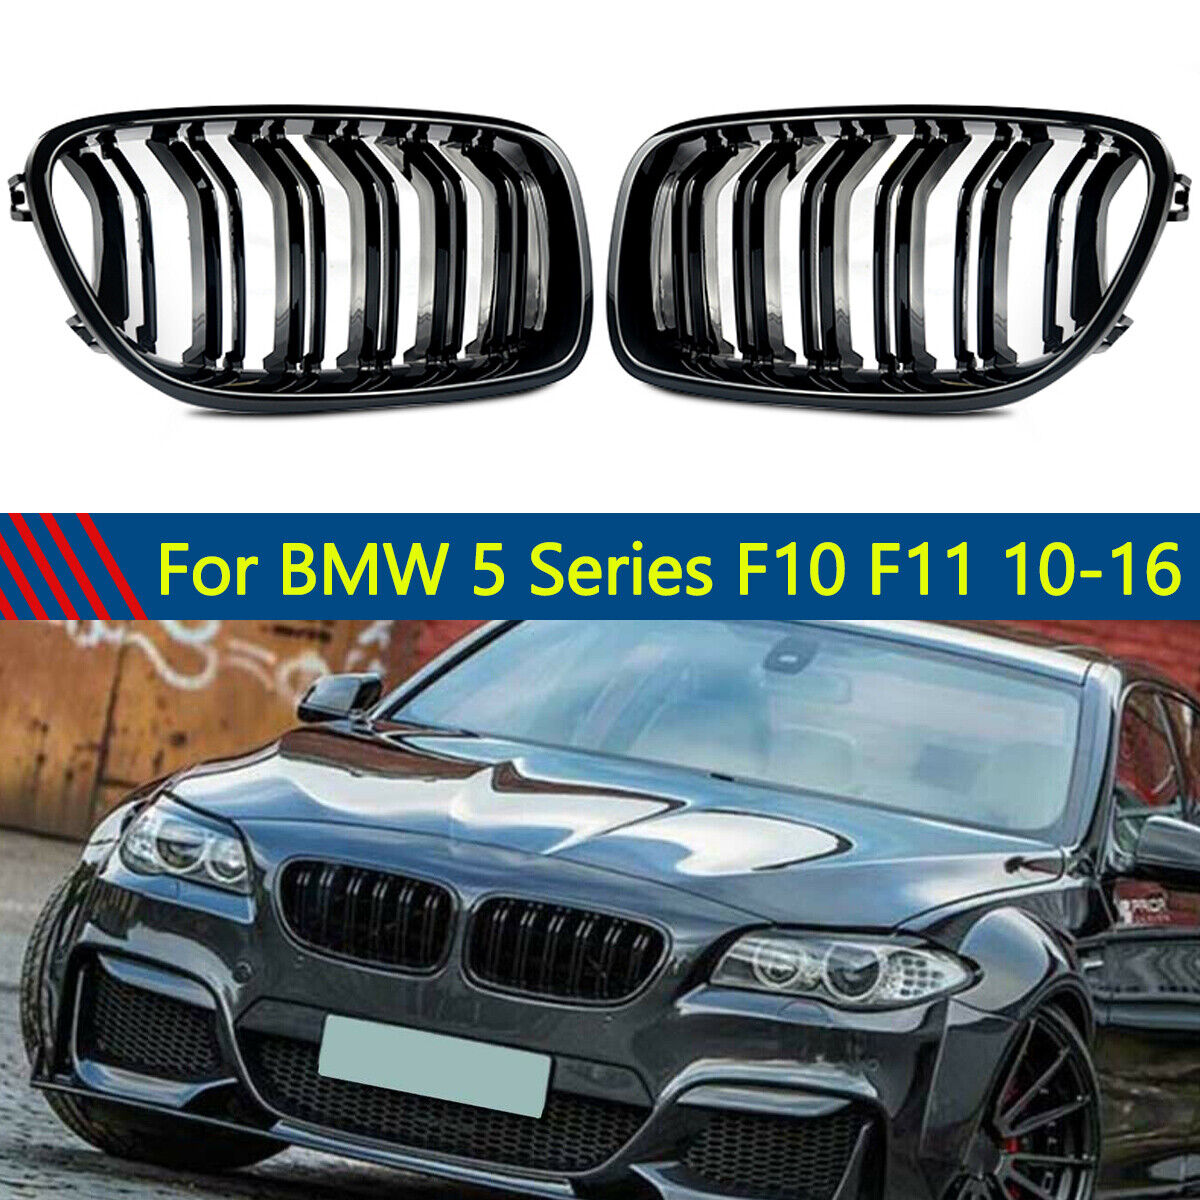 For 10-16 BMW F10 M5 style 535i 550i 528i Front Hood Kidney Grille Gloss Black